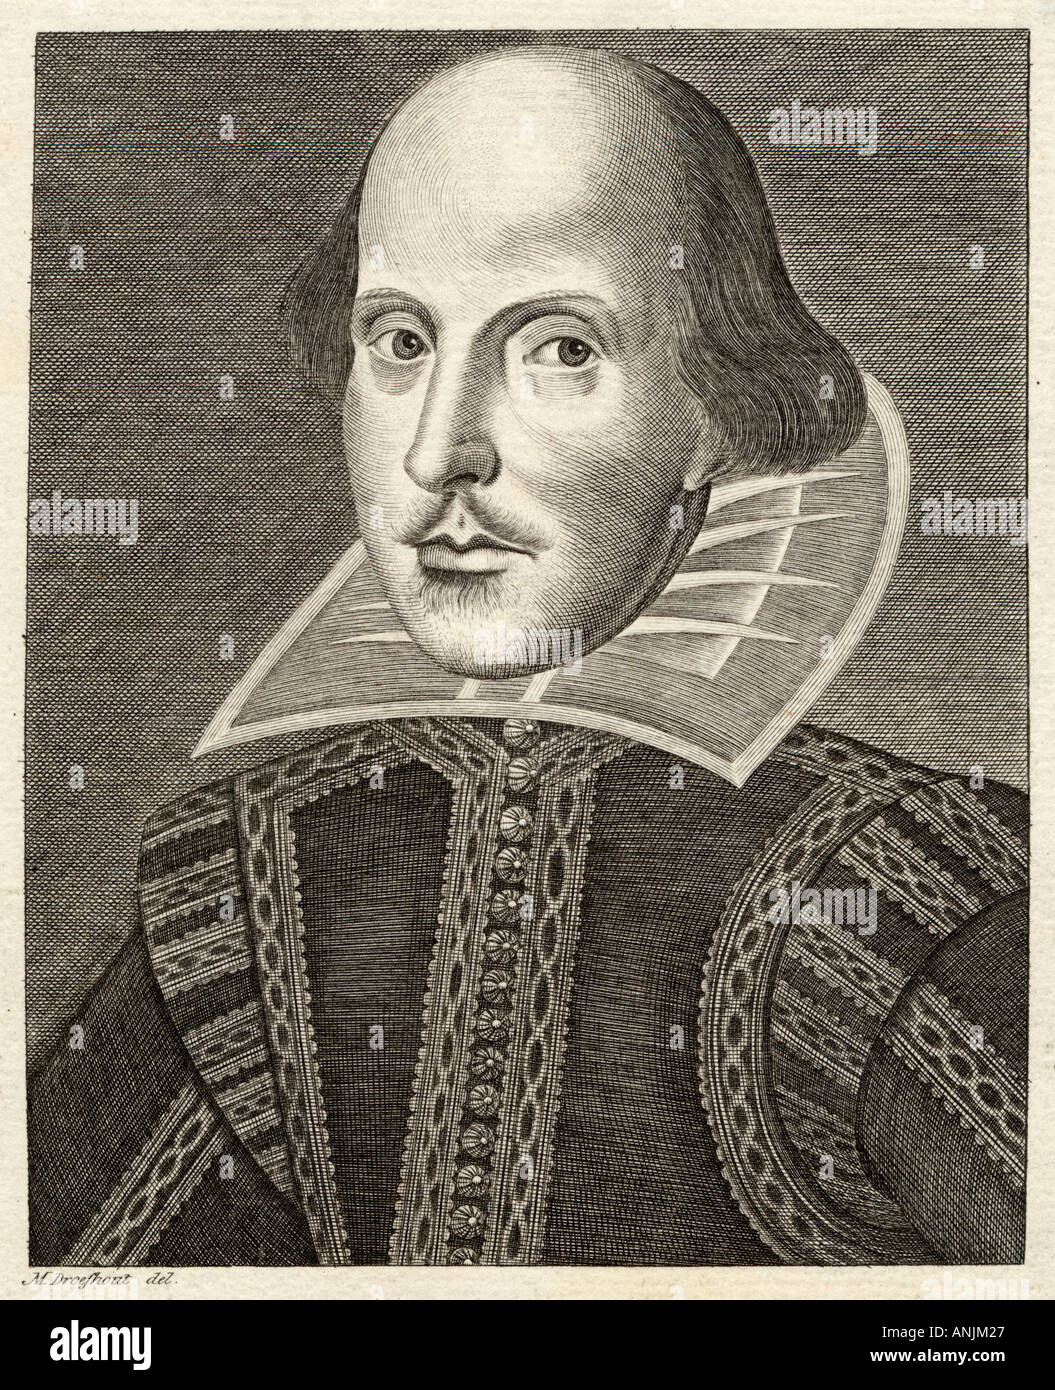 William Shakespeare Banque D'Images